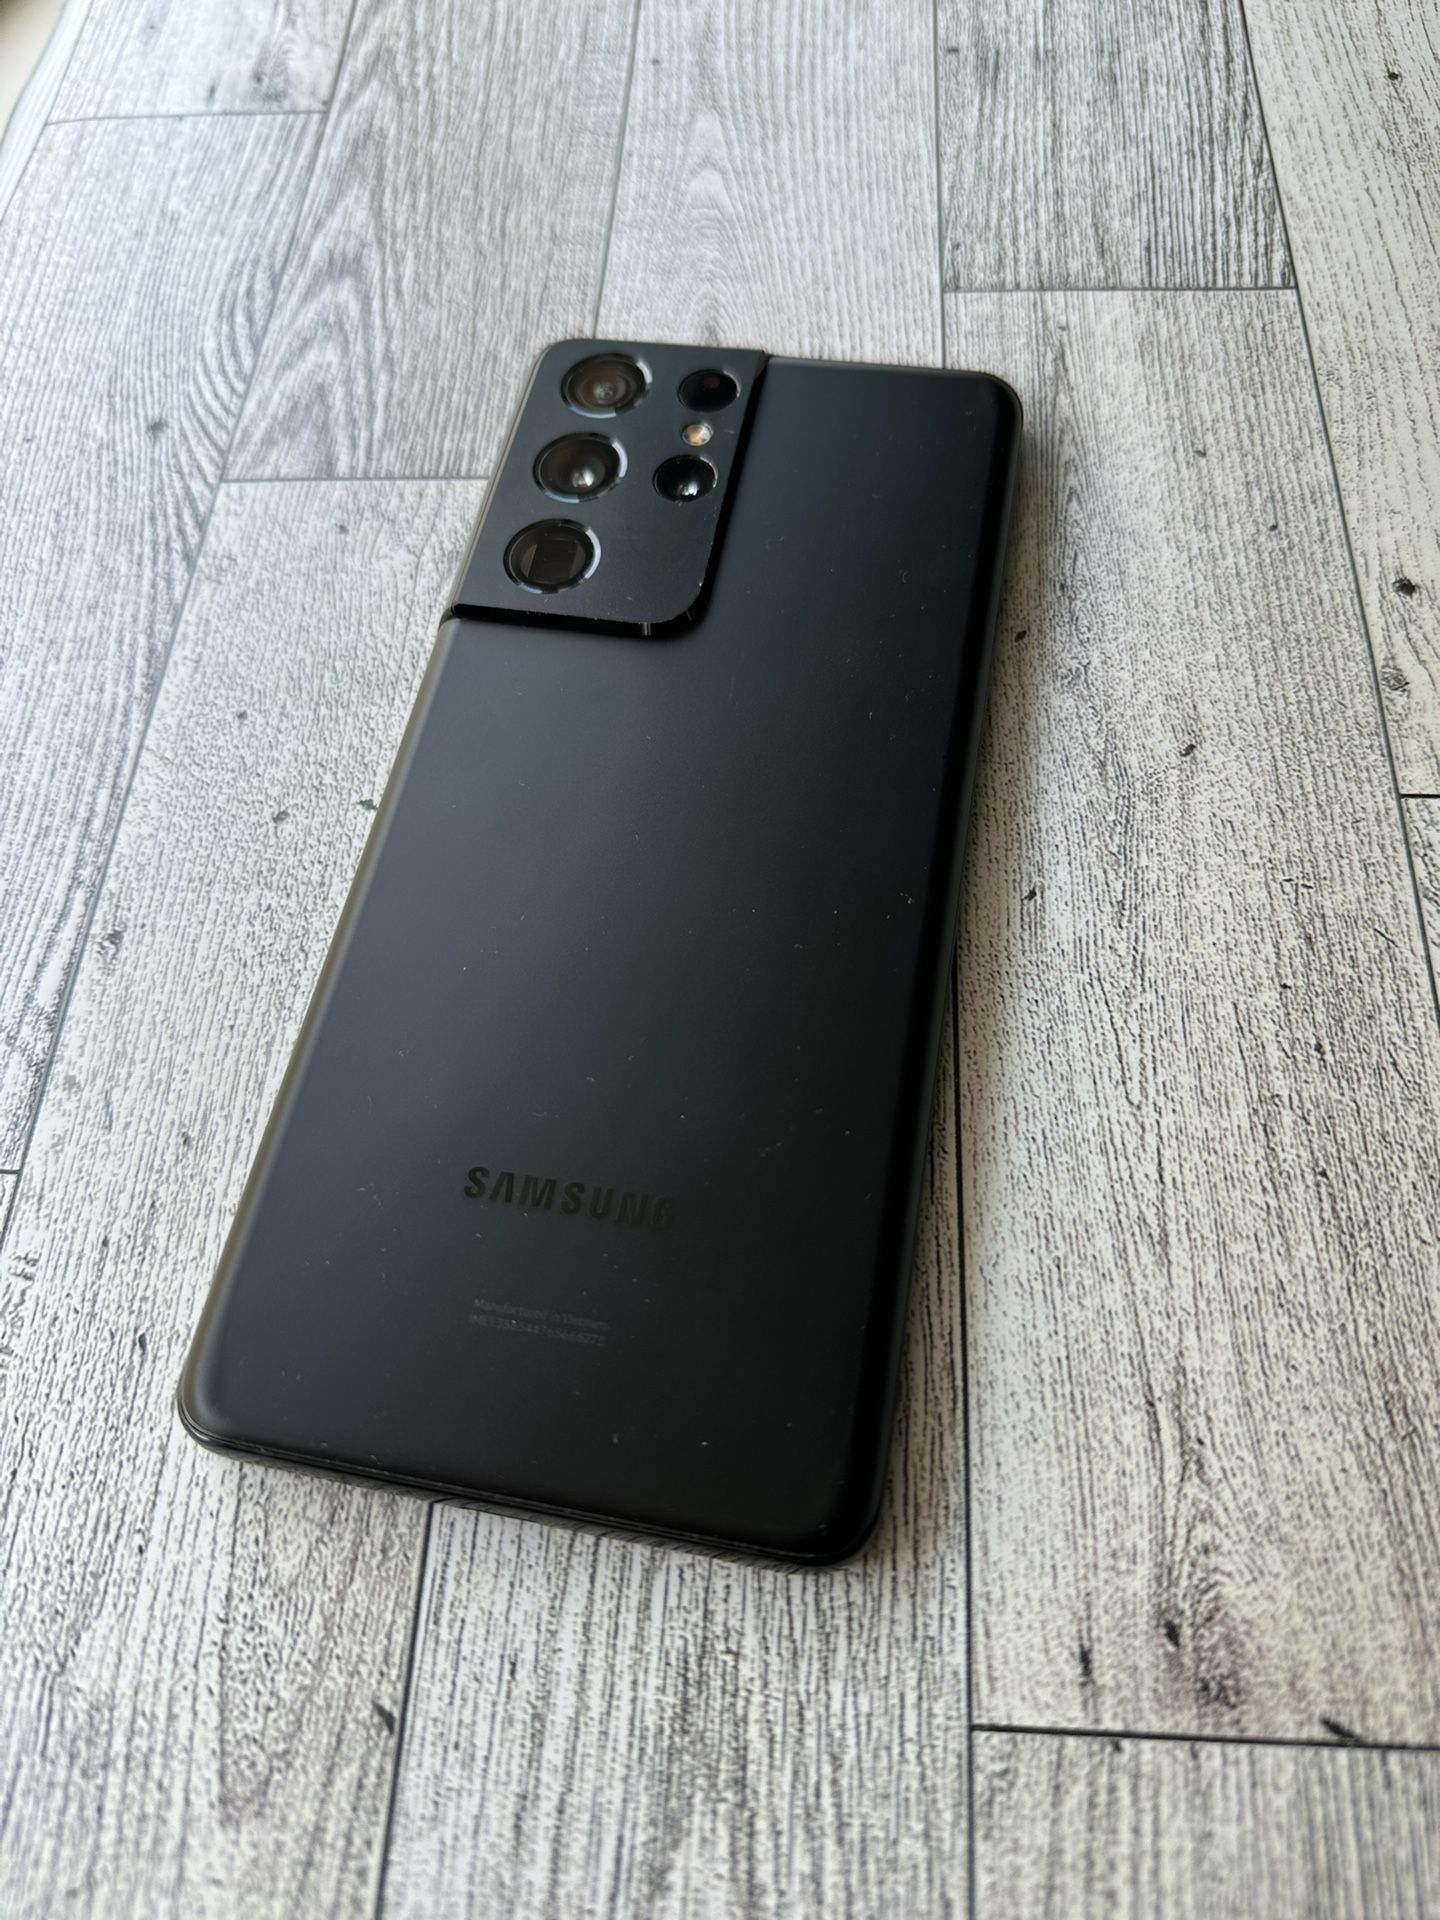 Samsung  Galaxy S21 ULTRA (128GB) UNLOCKED 🌎 DESBLOQUEADO For All Carriers 